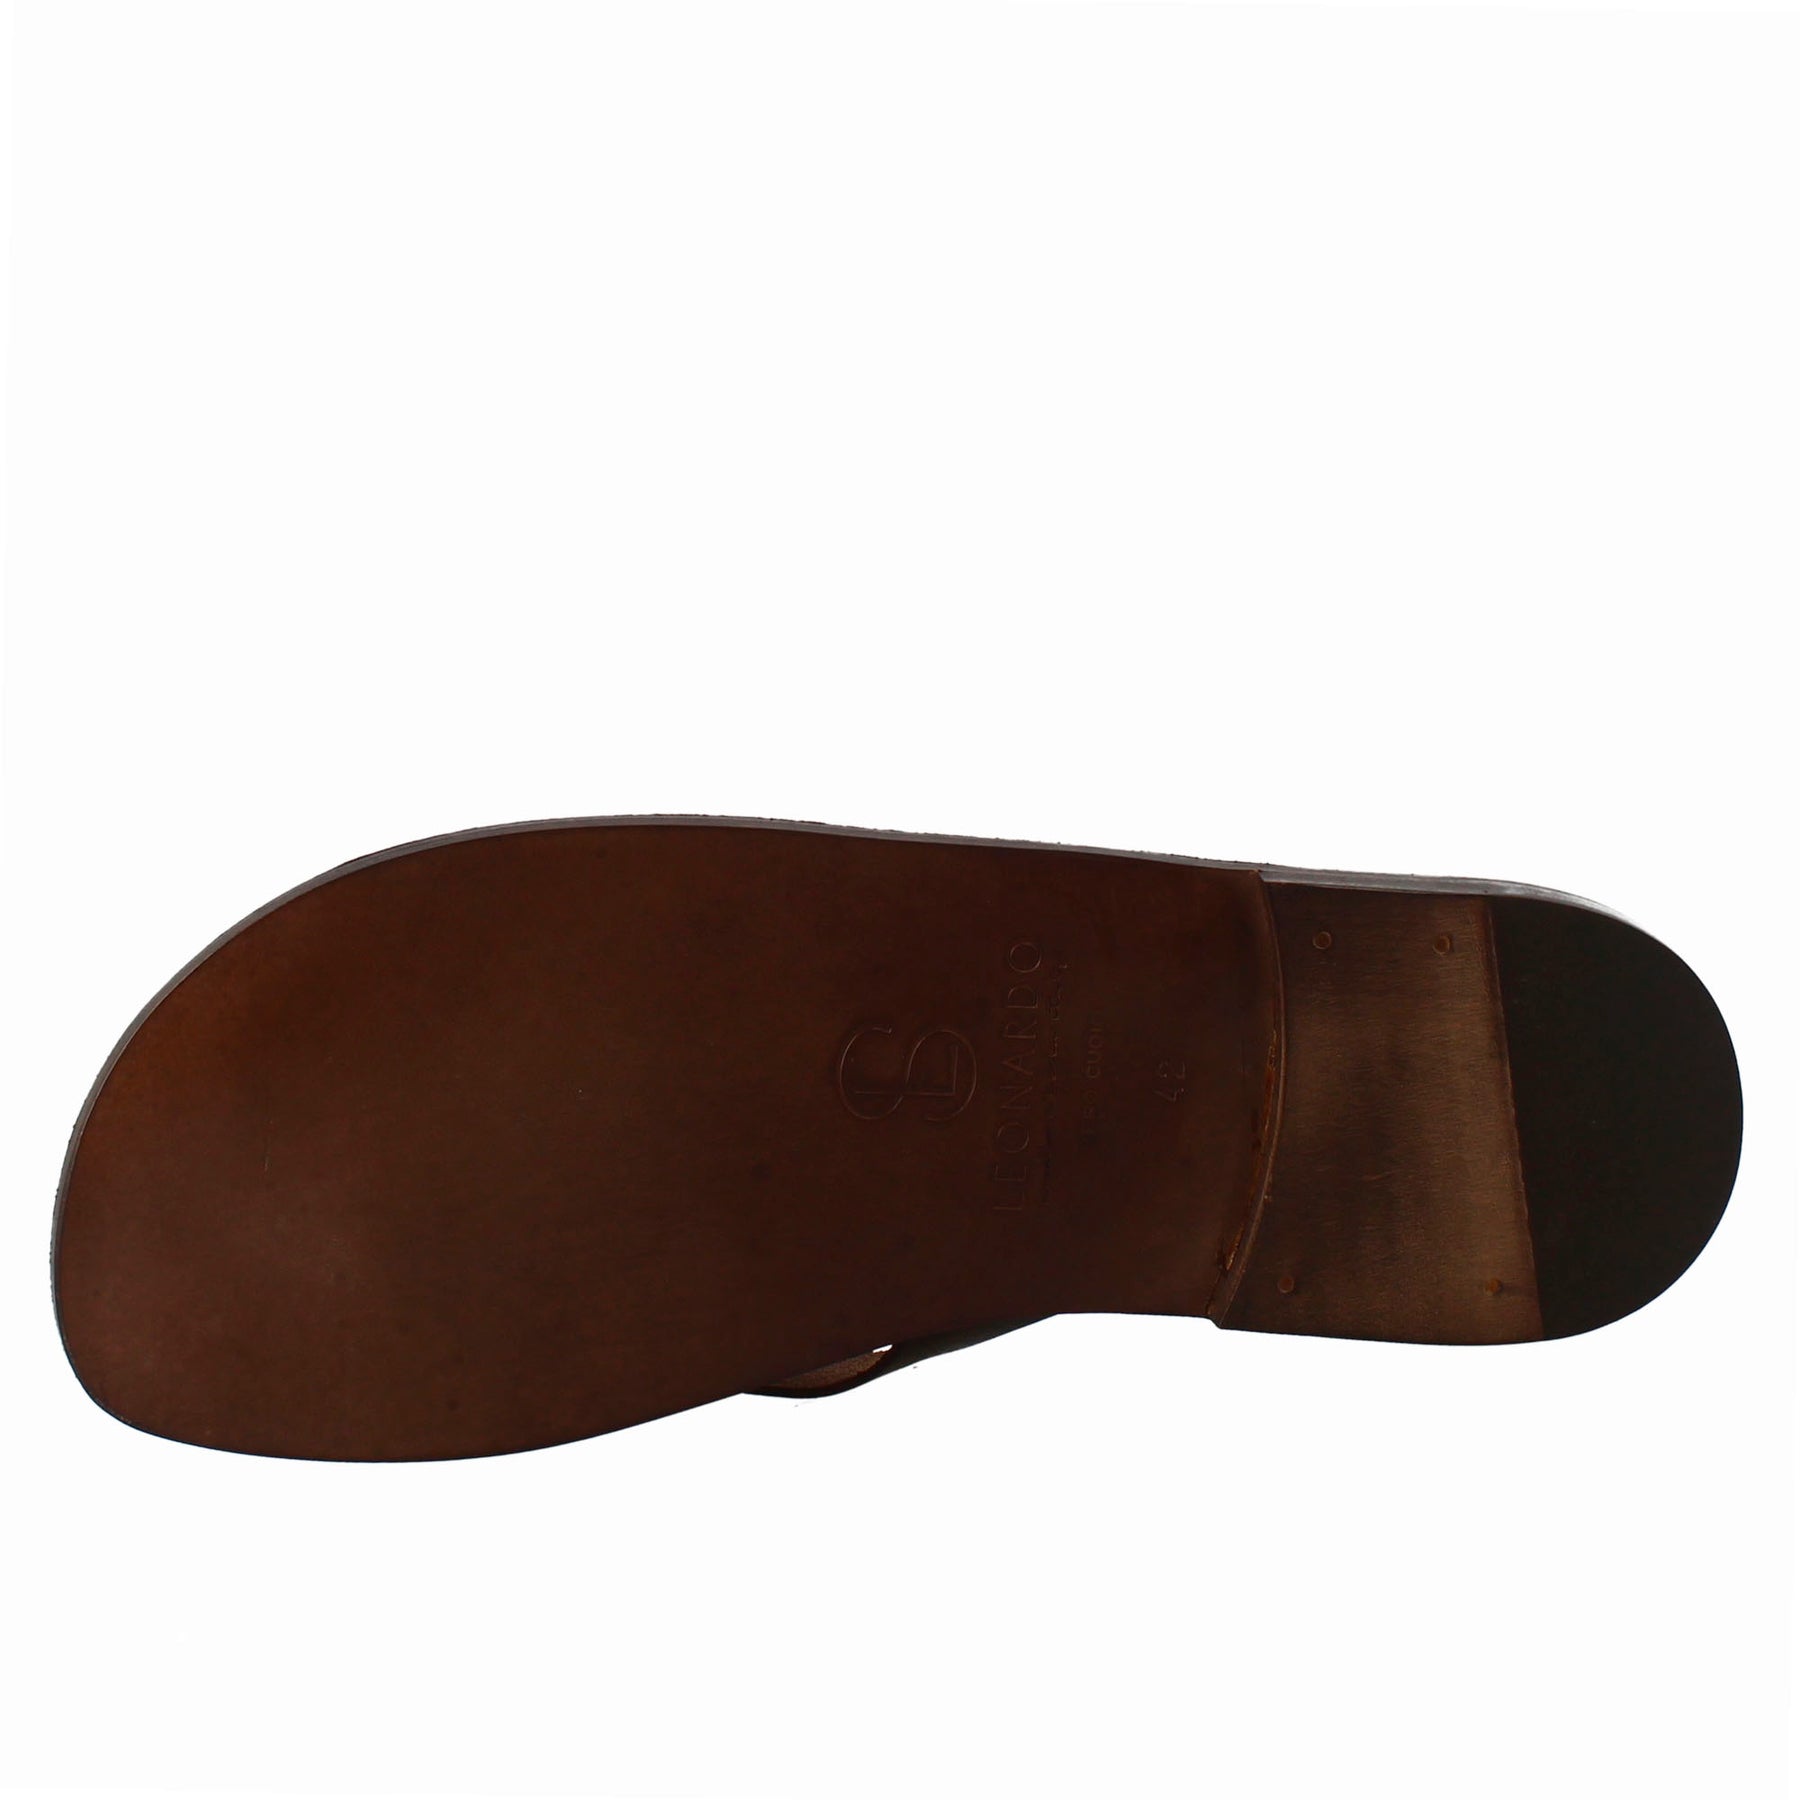 Men's gladiator sandals in Arezzo in brown leather